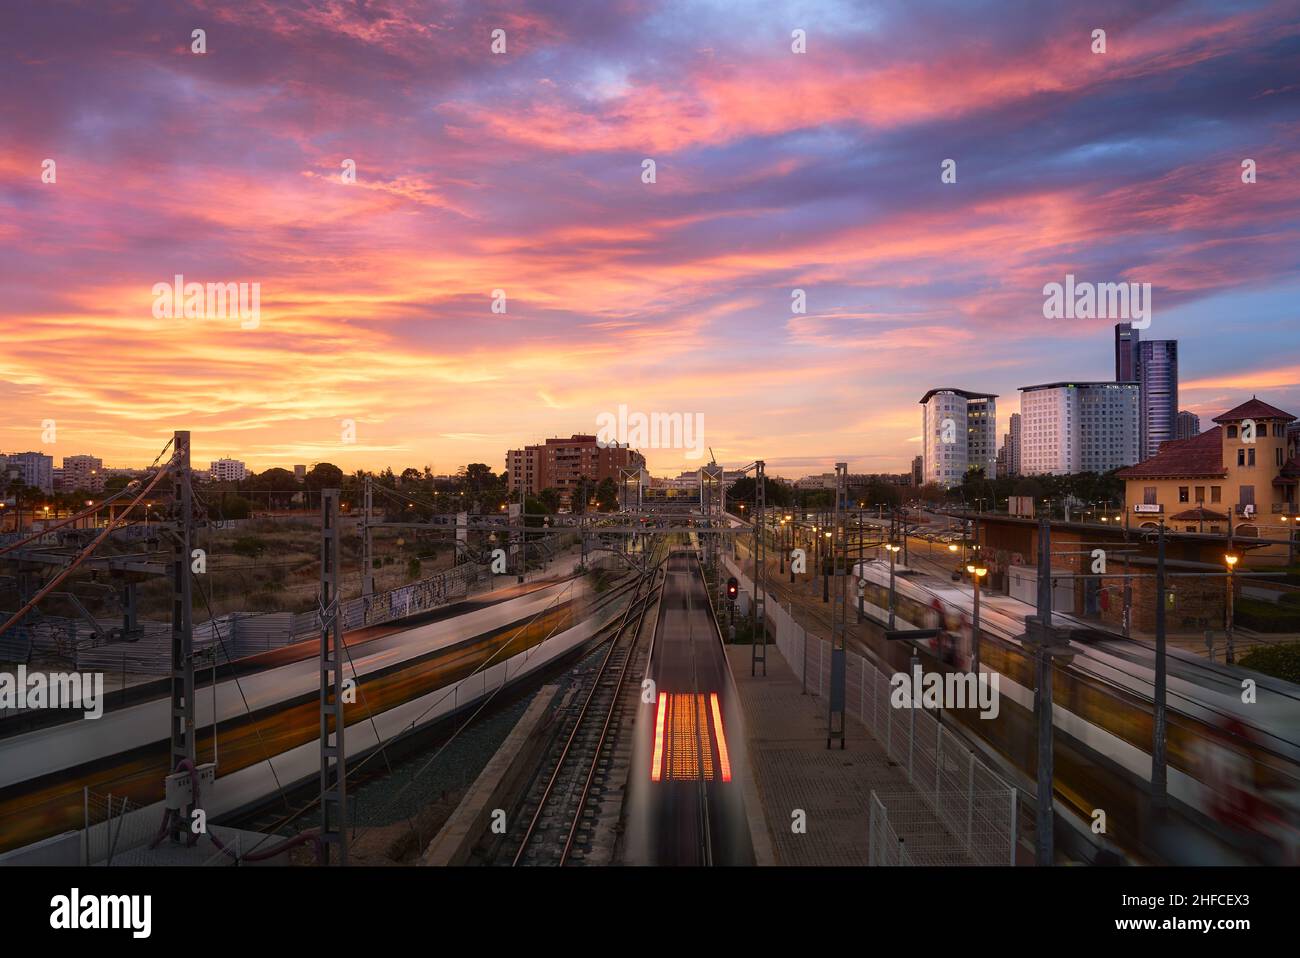 Empalme station at sunrise (Valencia - Spain) Stock Photo